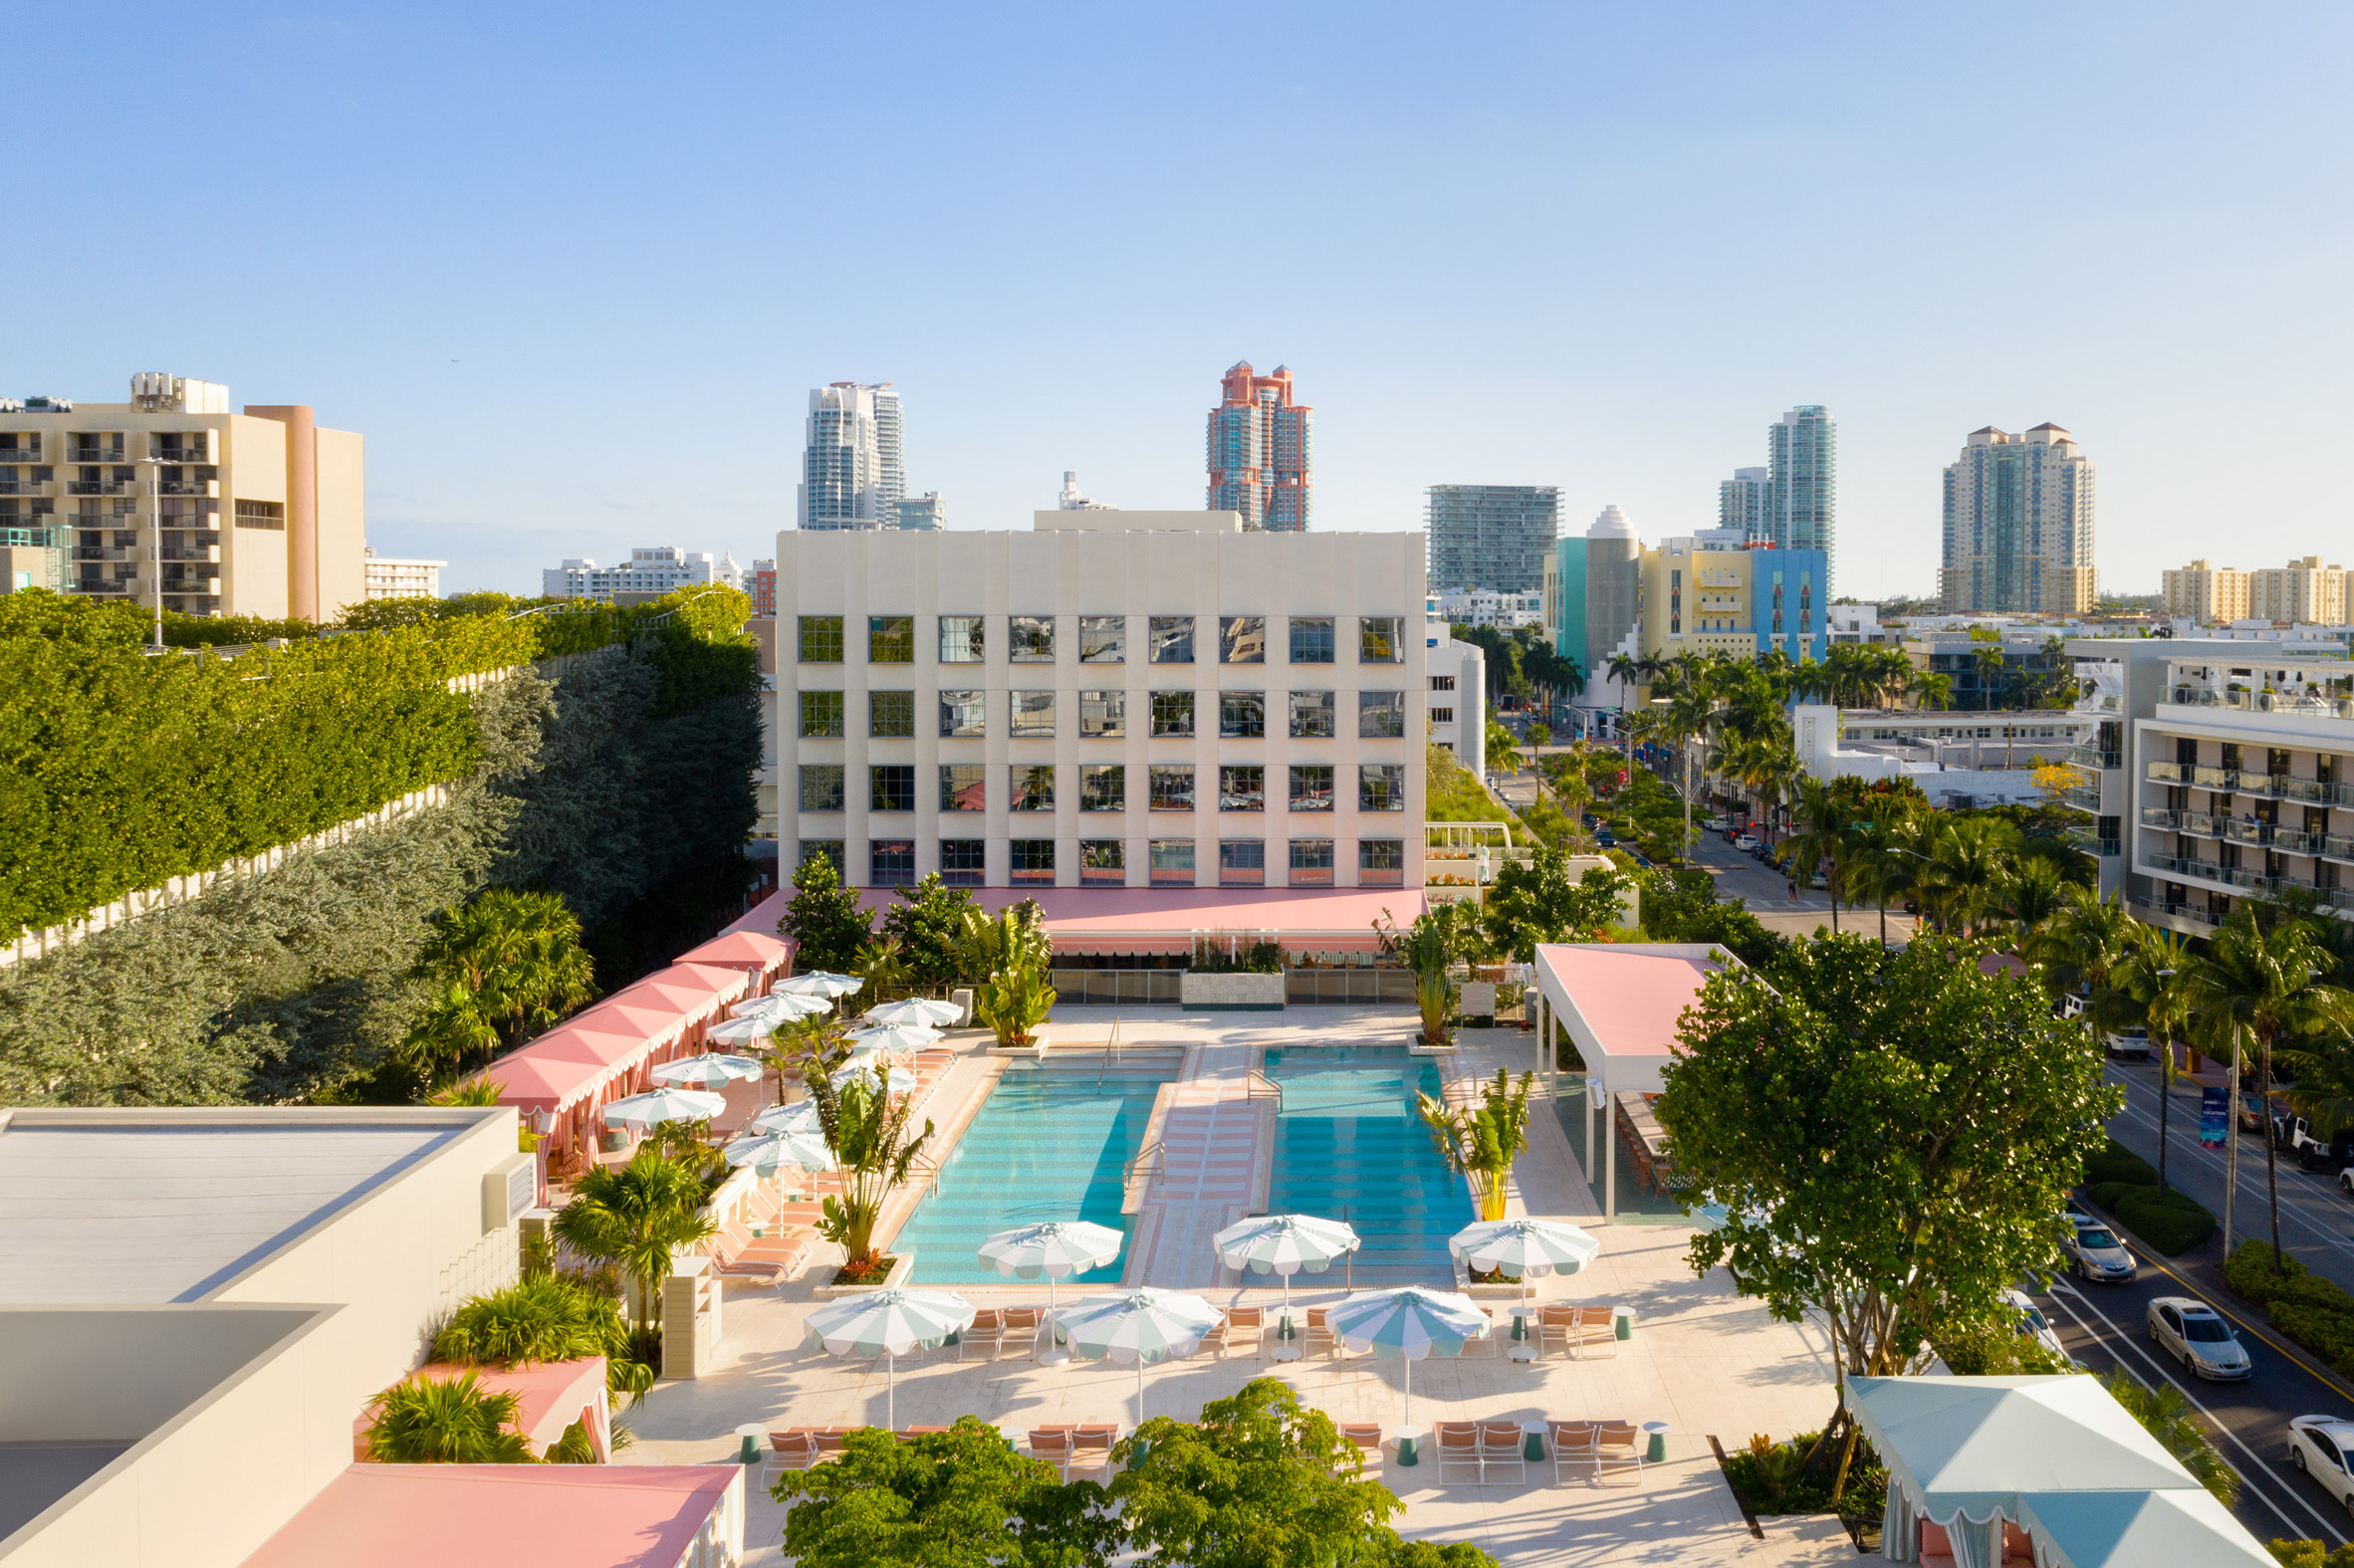 The Goodtime Hotel Miami Pharrel Williams